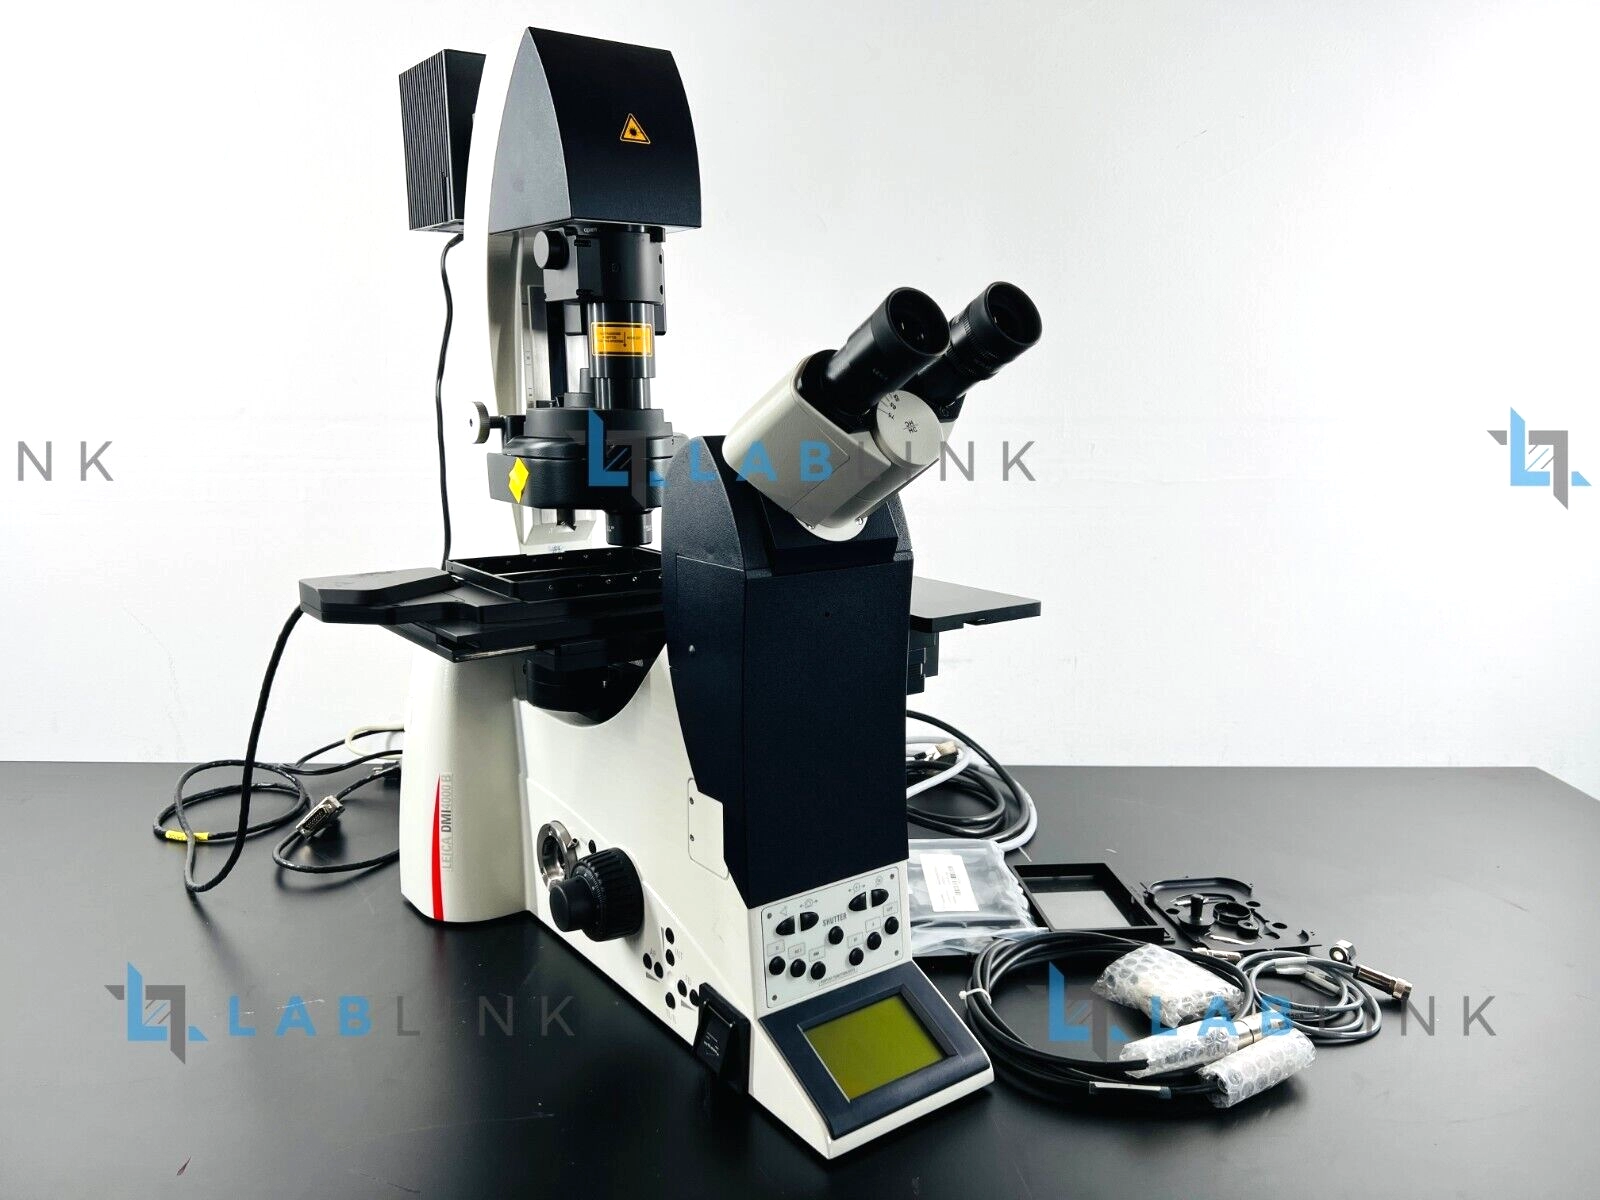 Leica DMI4000 CS Automated Confocal Microscope wit